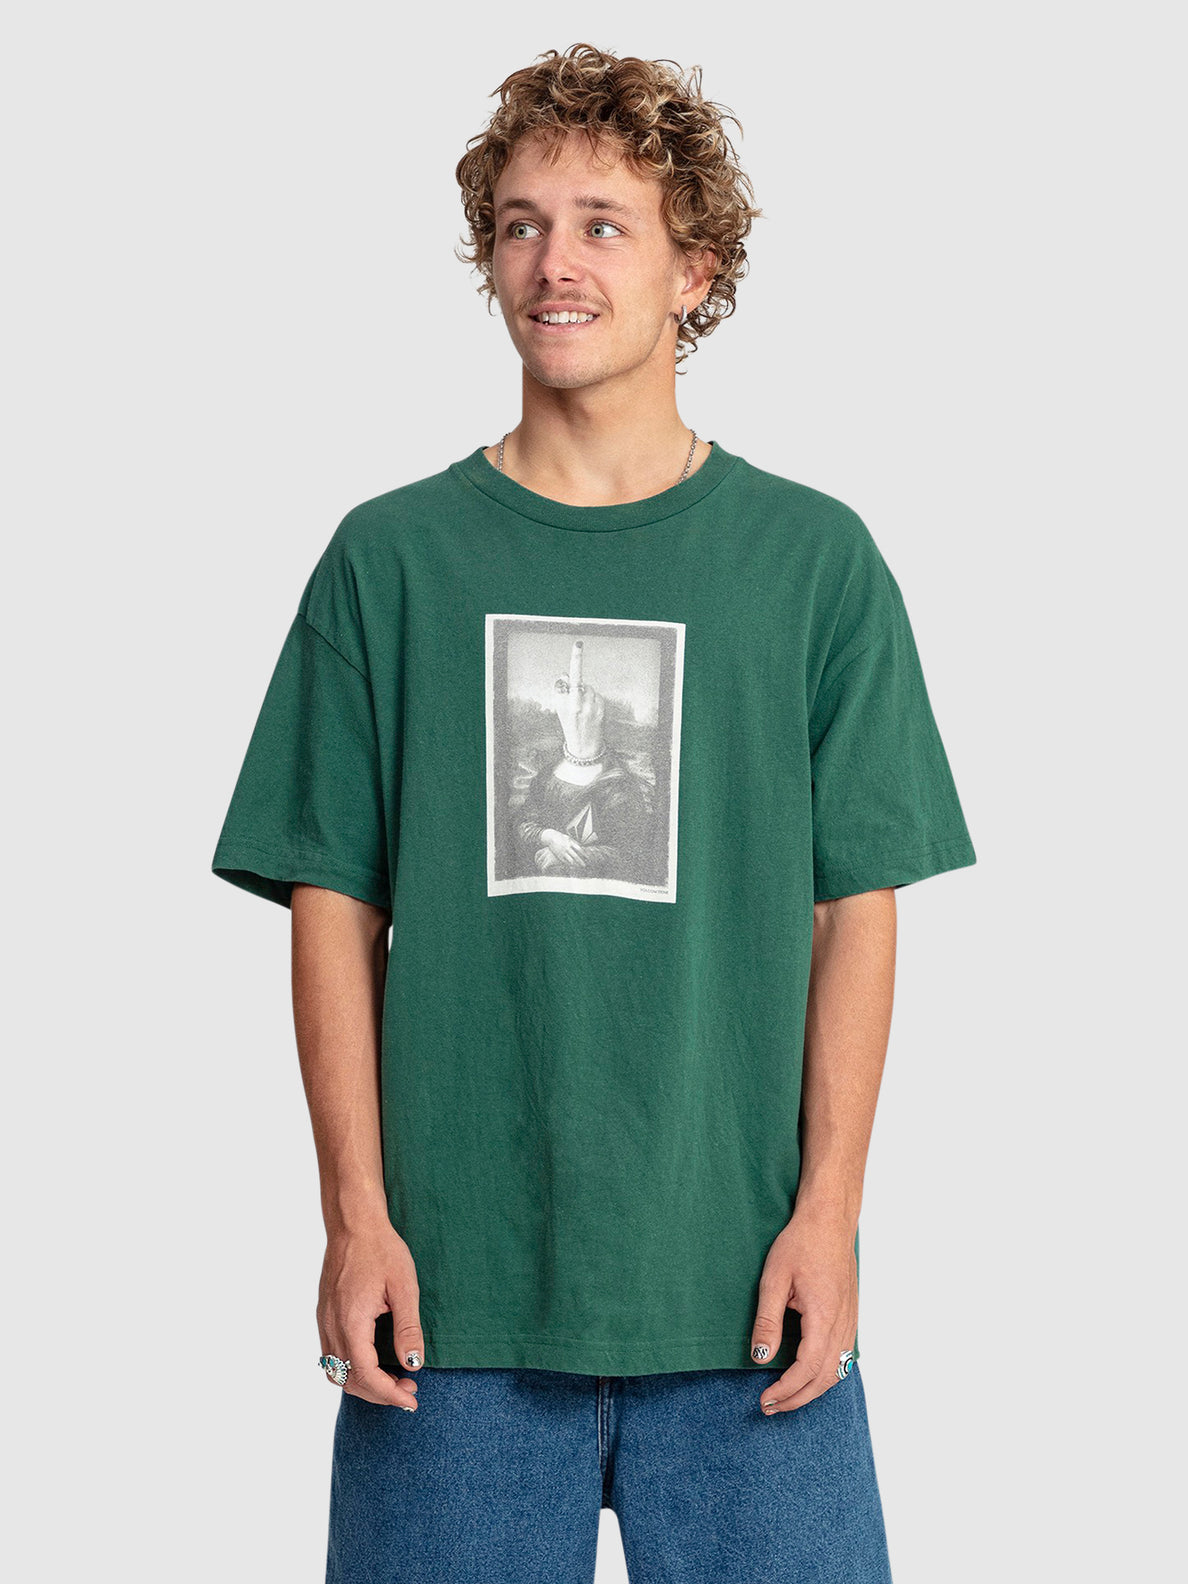 Mona Short Sleeve Lse T-Shirt - Ranger Green